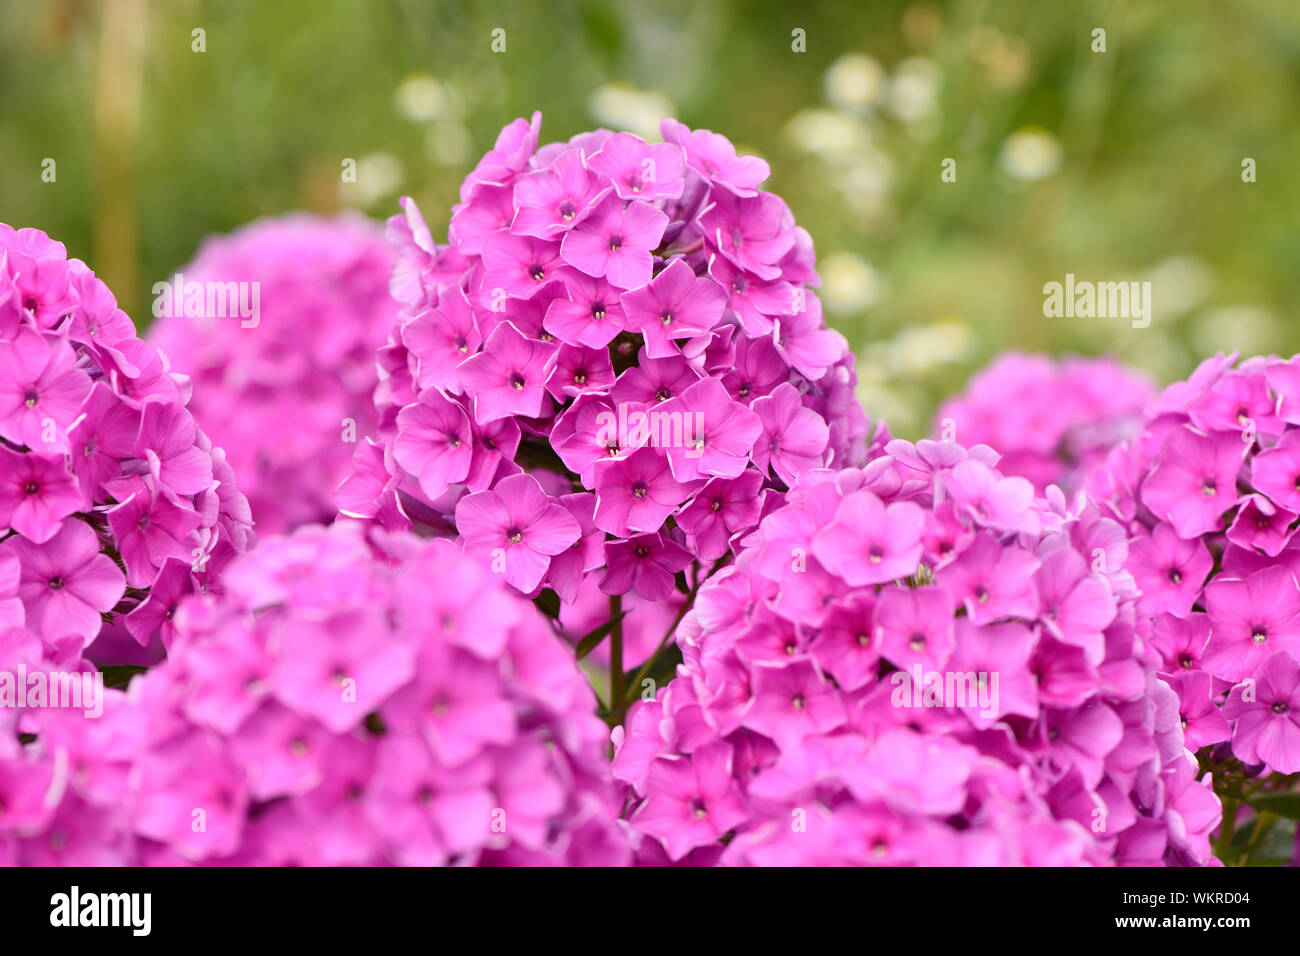 Violet flowers of phlox (Phlox douglasii) plant. High resolution photo. Stock Photo